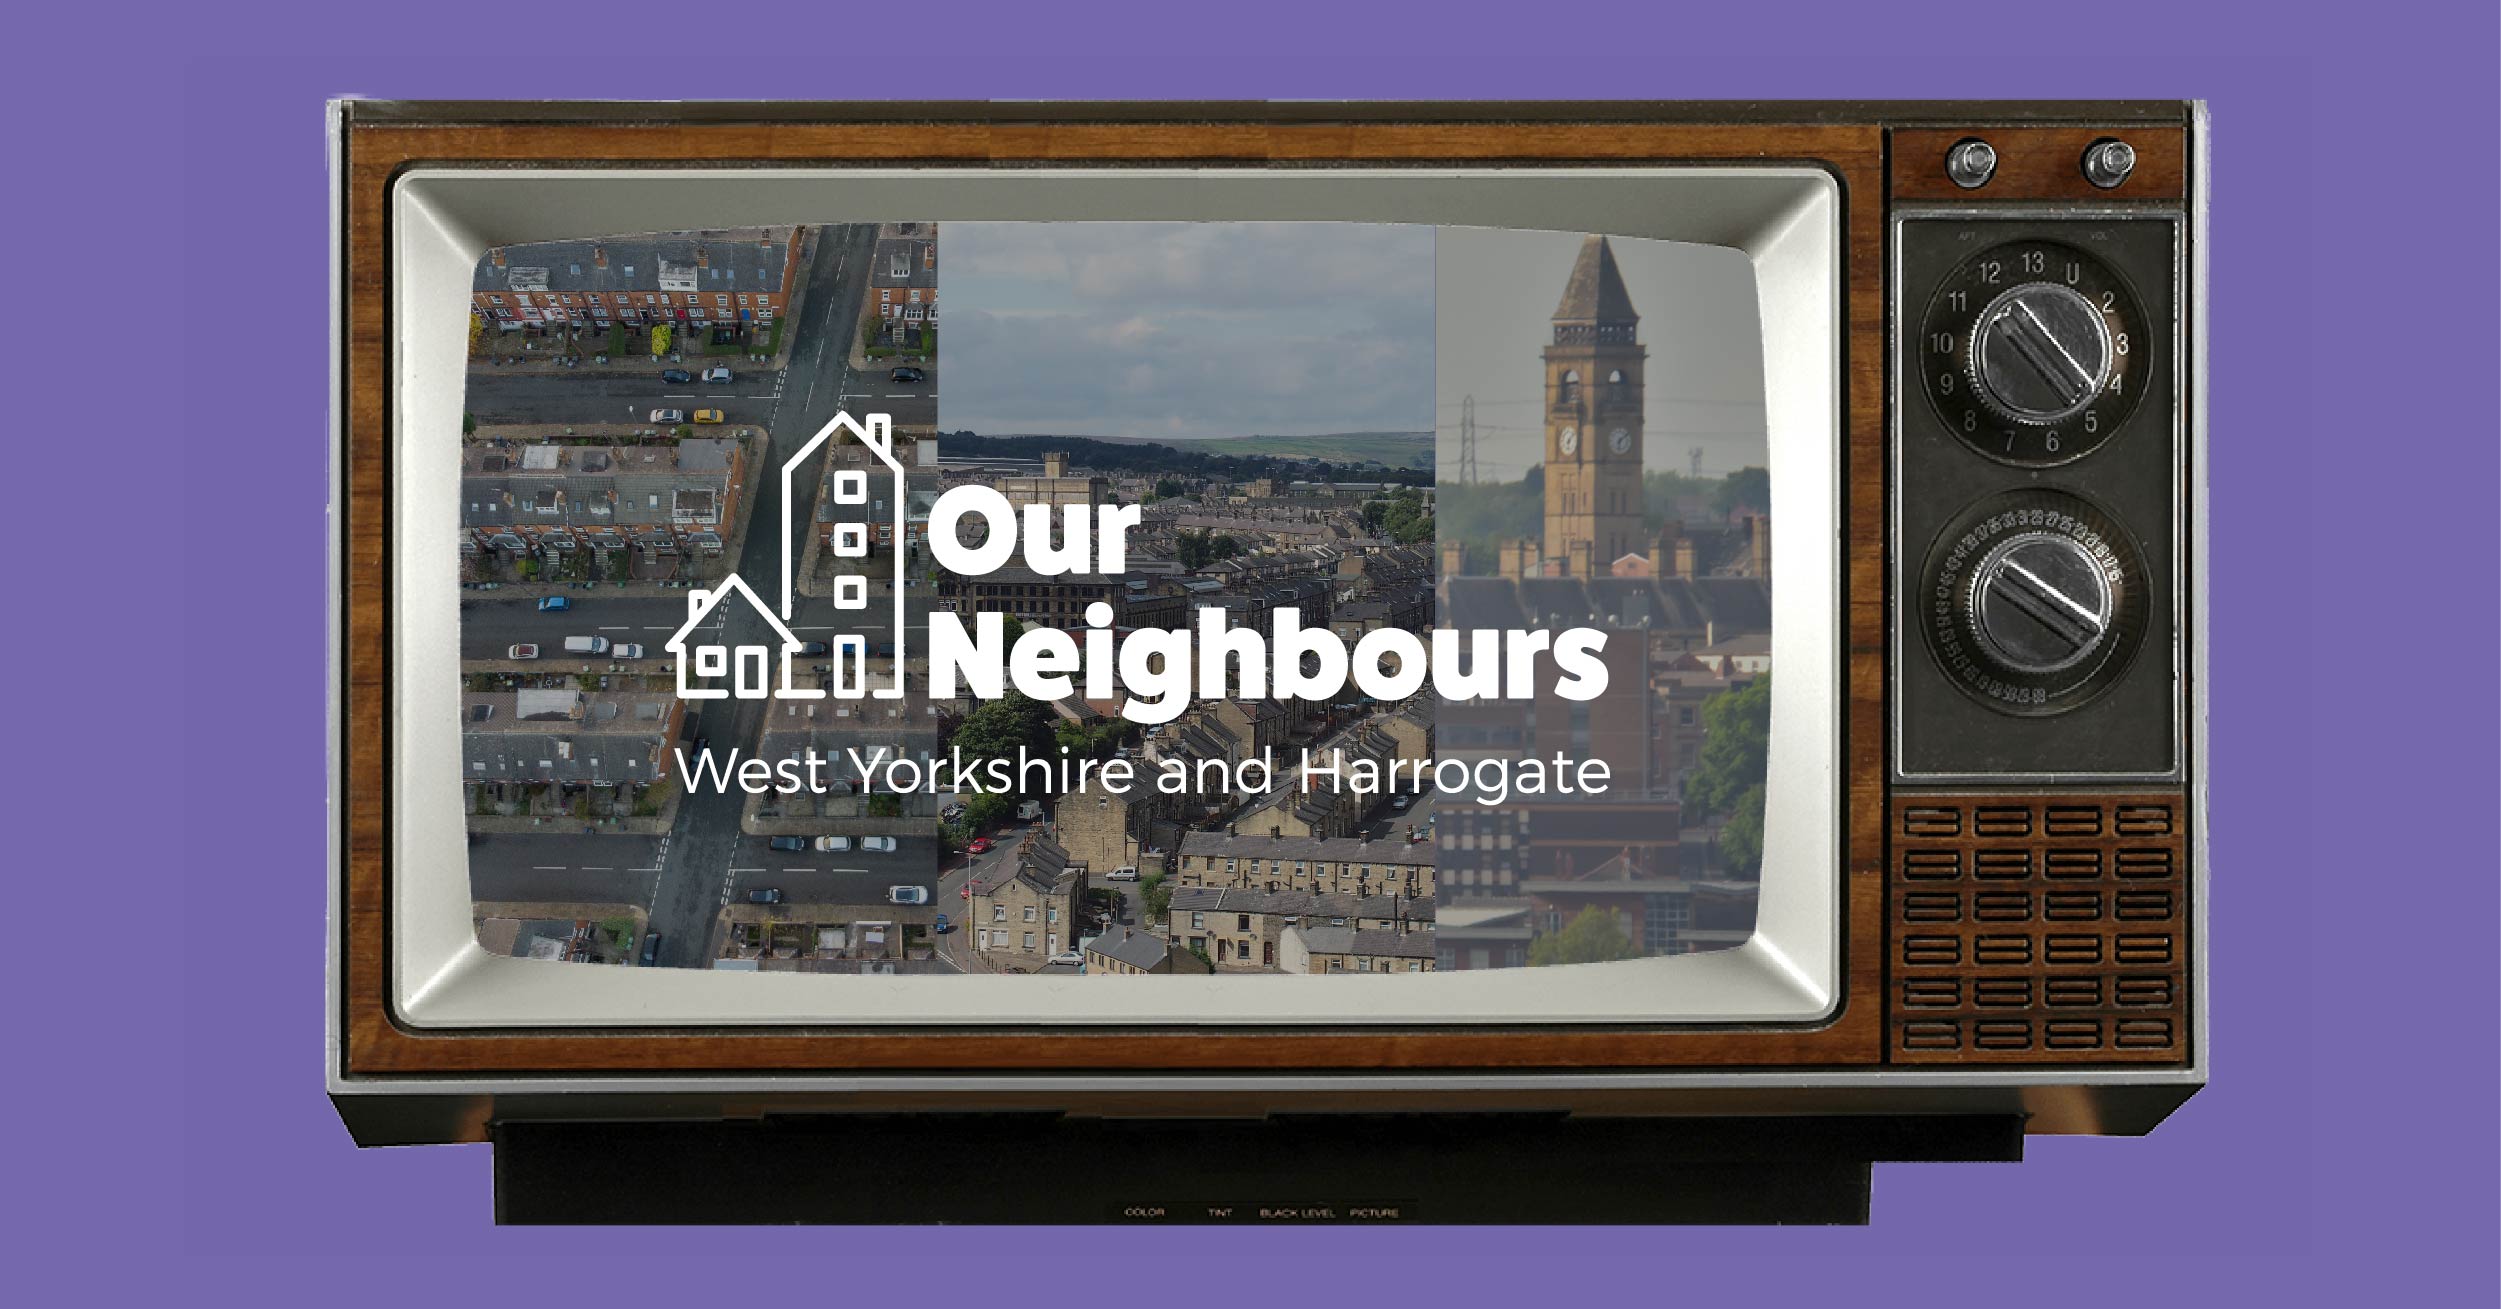 Our neighbours logo overlaid on retro TV